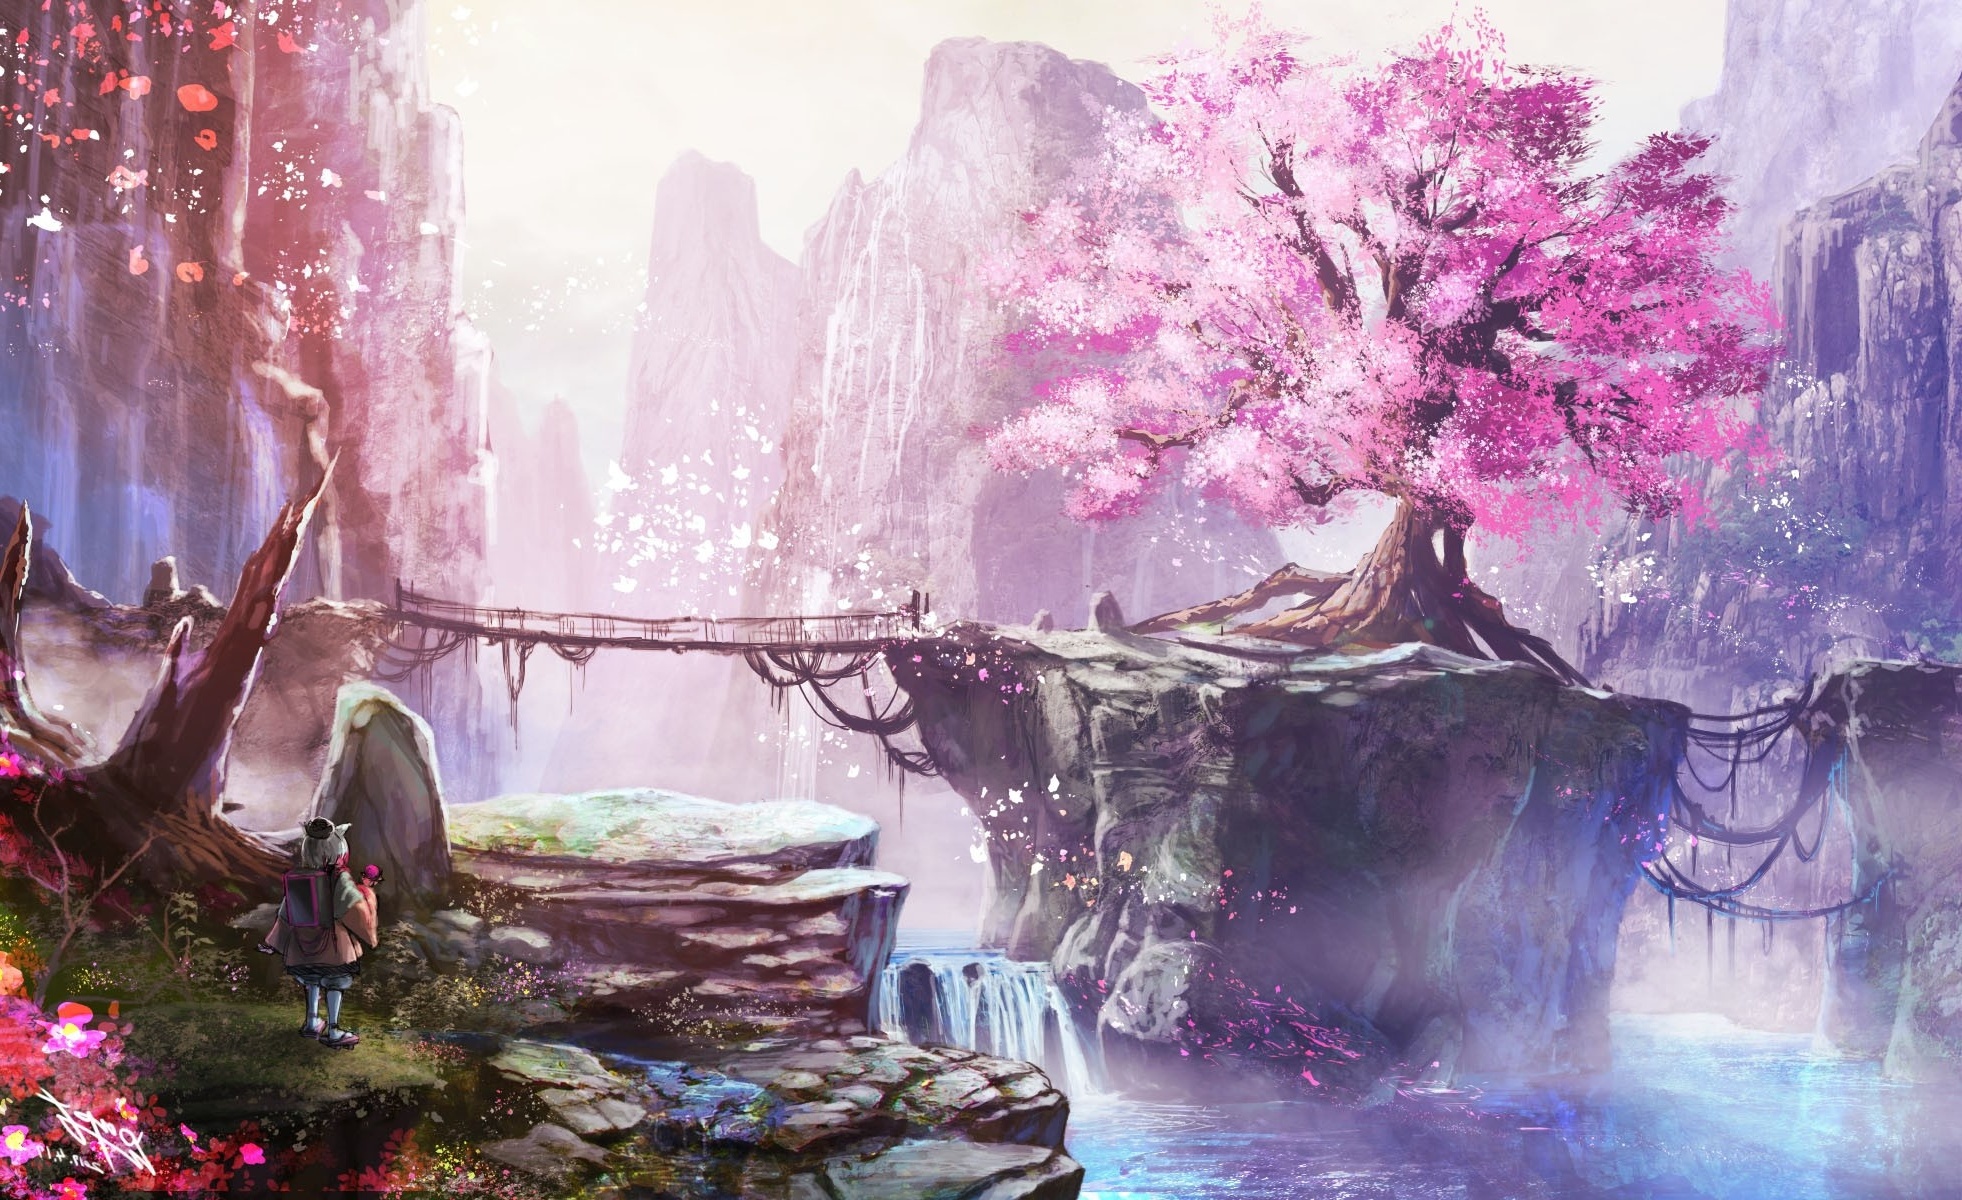 anime scenery cherry blossoms wallpaper